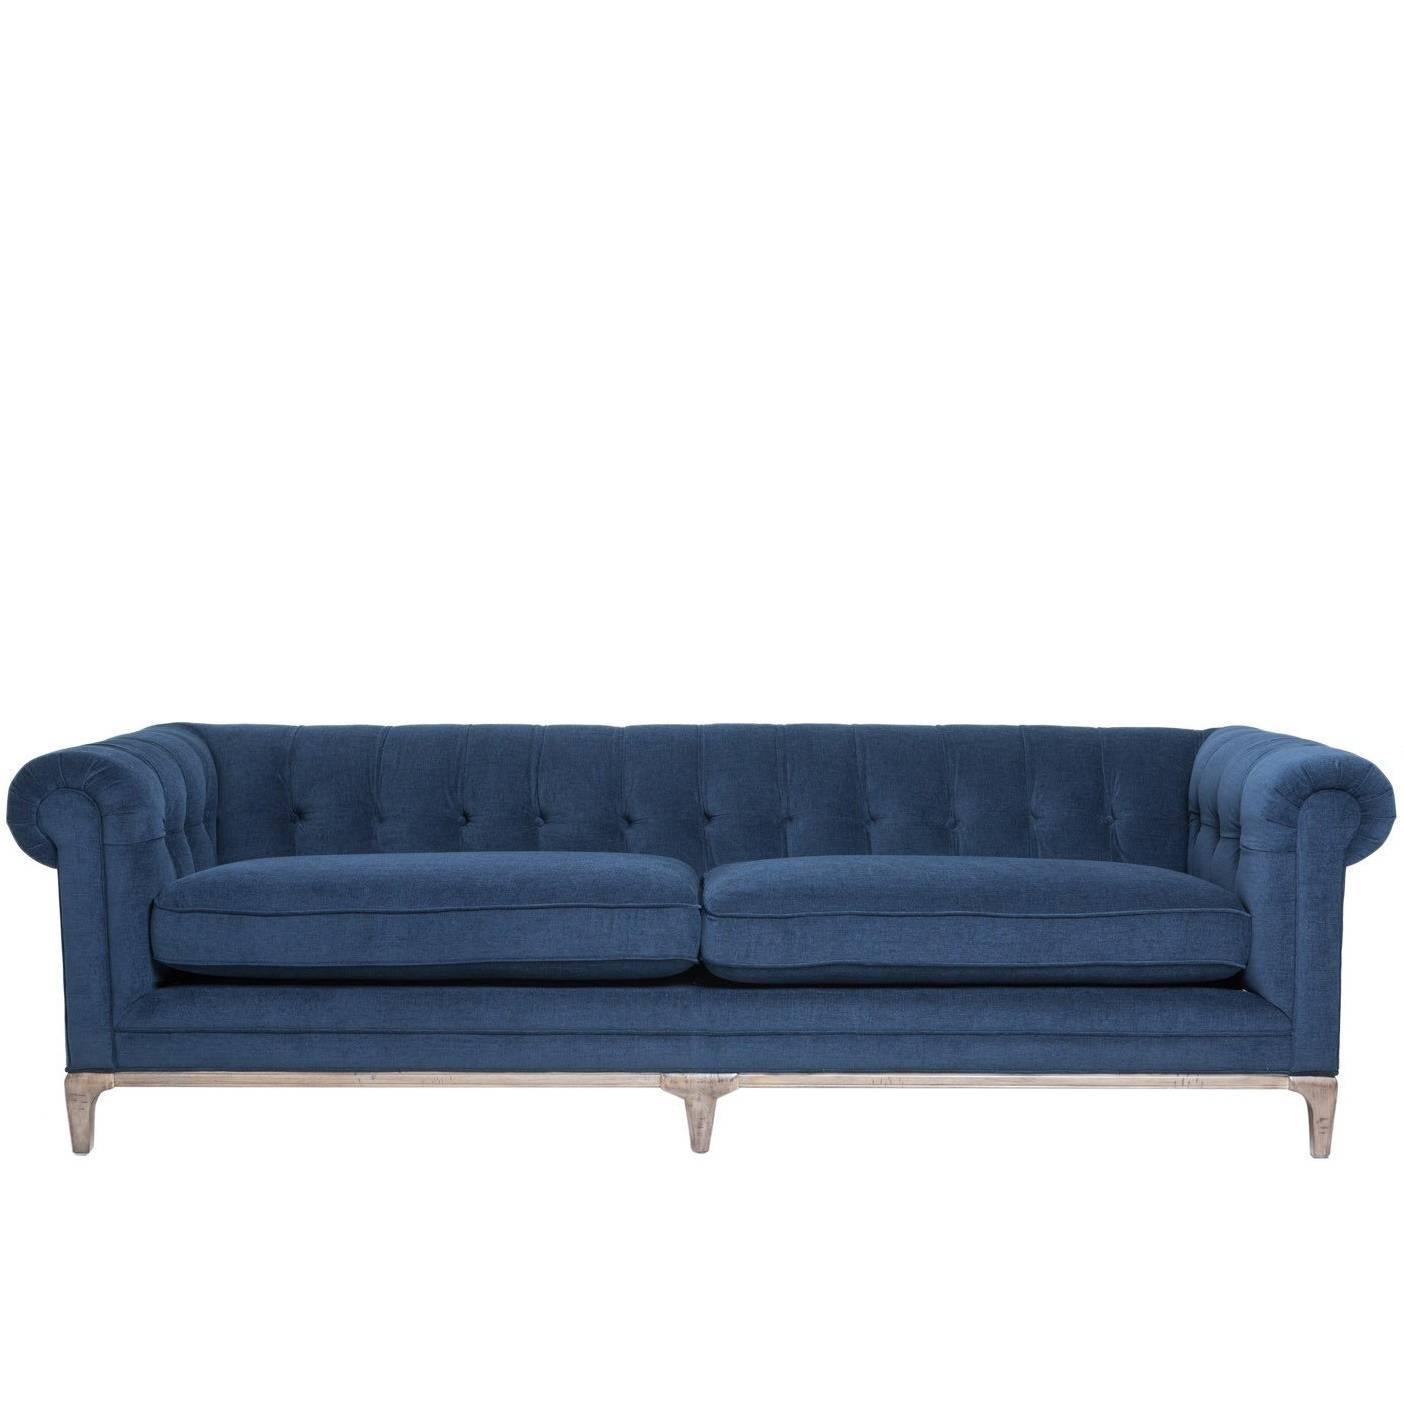 Morgan Sofa For Sale